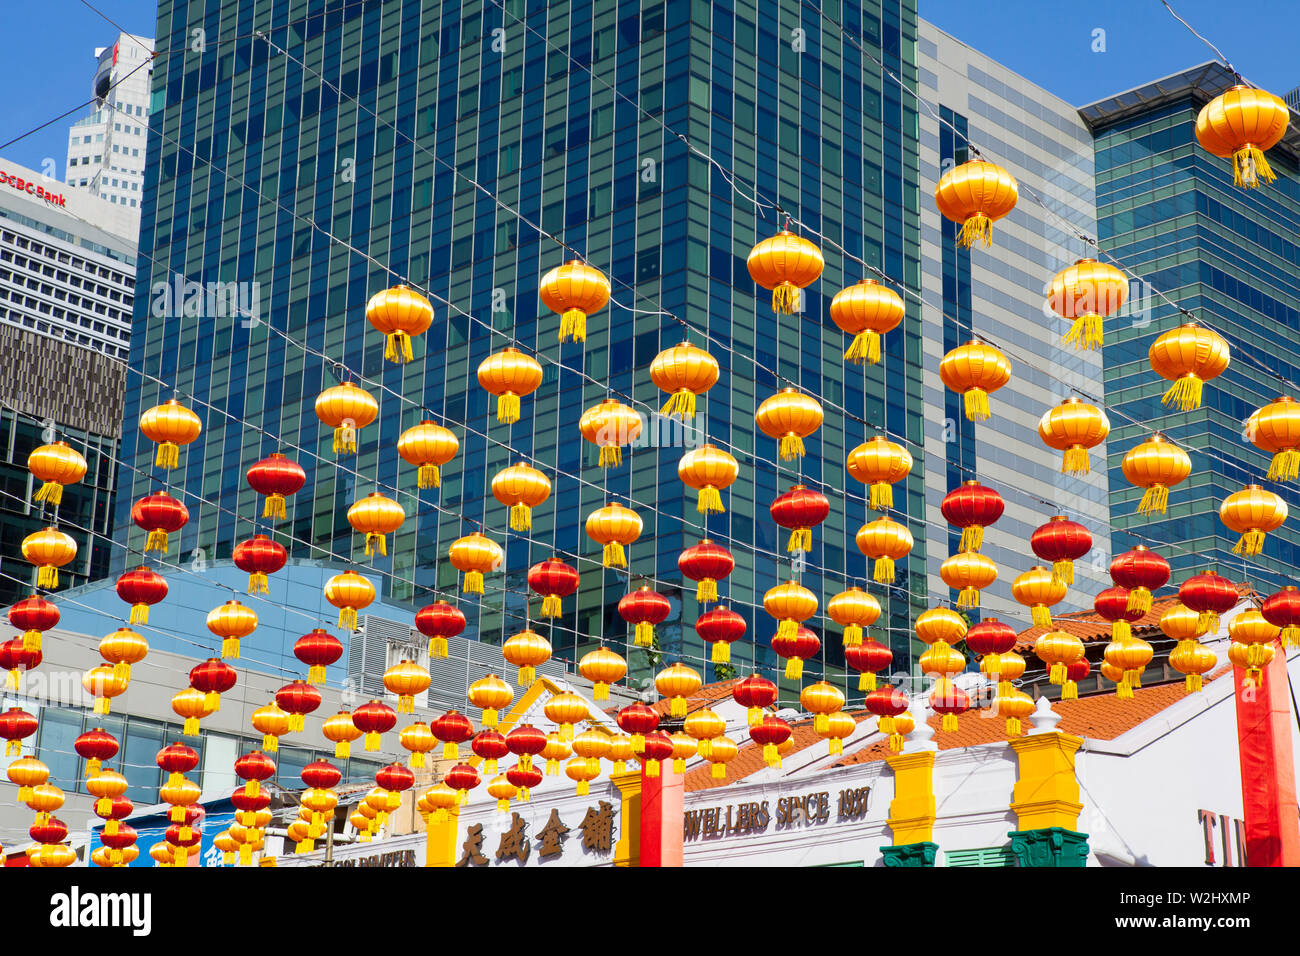 Chinese New Year Window Display in ESB 纽约帝国大厦春节主题橱窗- United Design lab